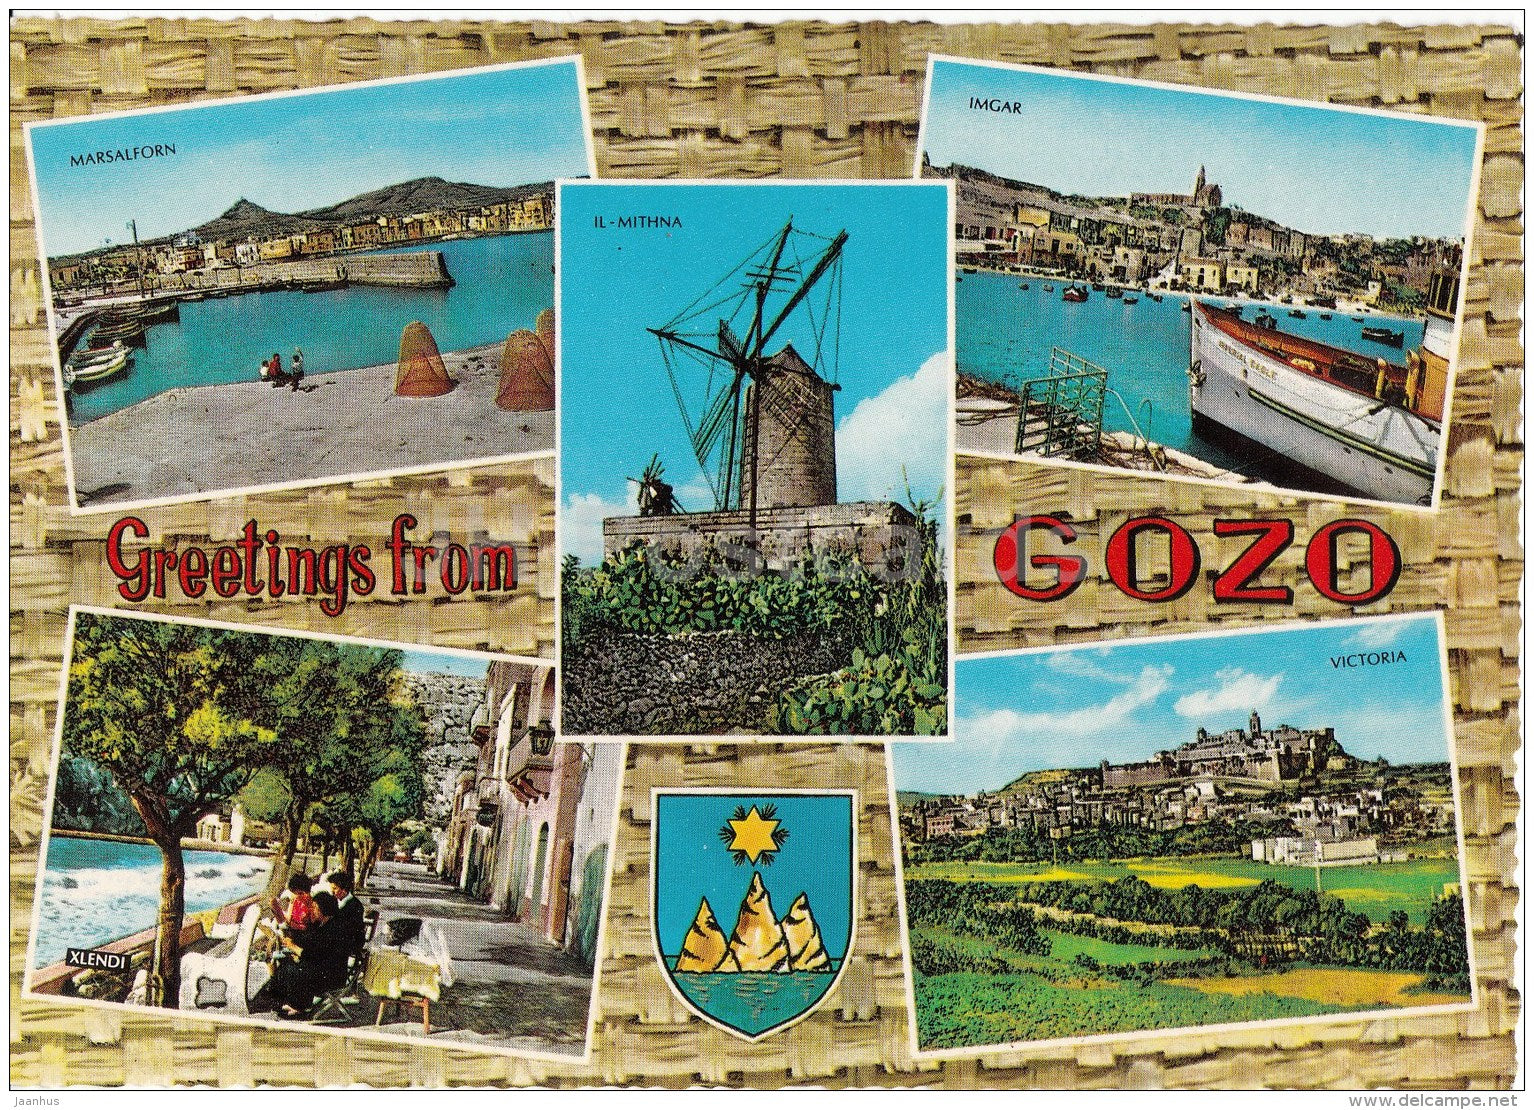 Greetings from Gozo - windmill - Marsalforn - Imgar - Xlendi - Victoria - Malta - unused - JH Postcards